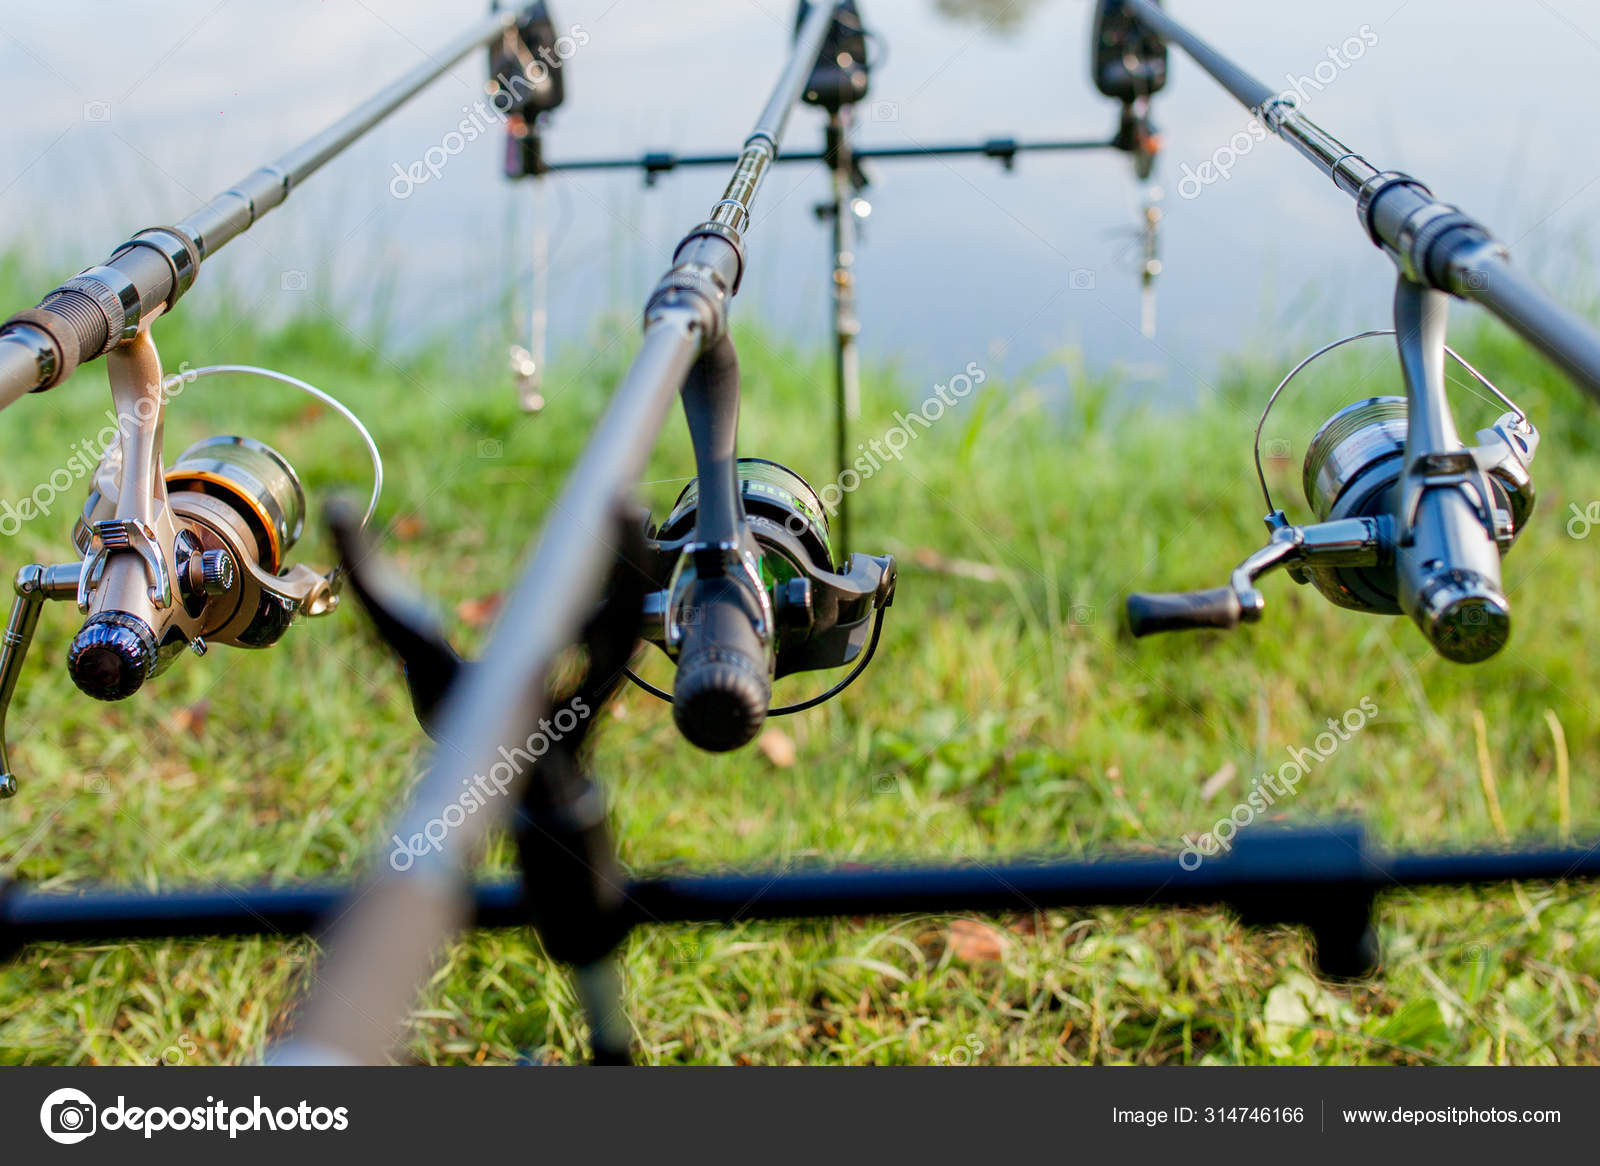 https://st4.depositphotos.com/6844612/31474/i/1600/depositphotos_314746166-stock-photo-closeup-of-a-reel-fishing.jpg